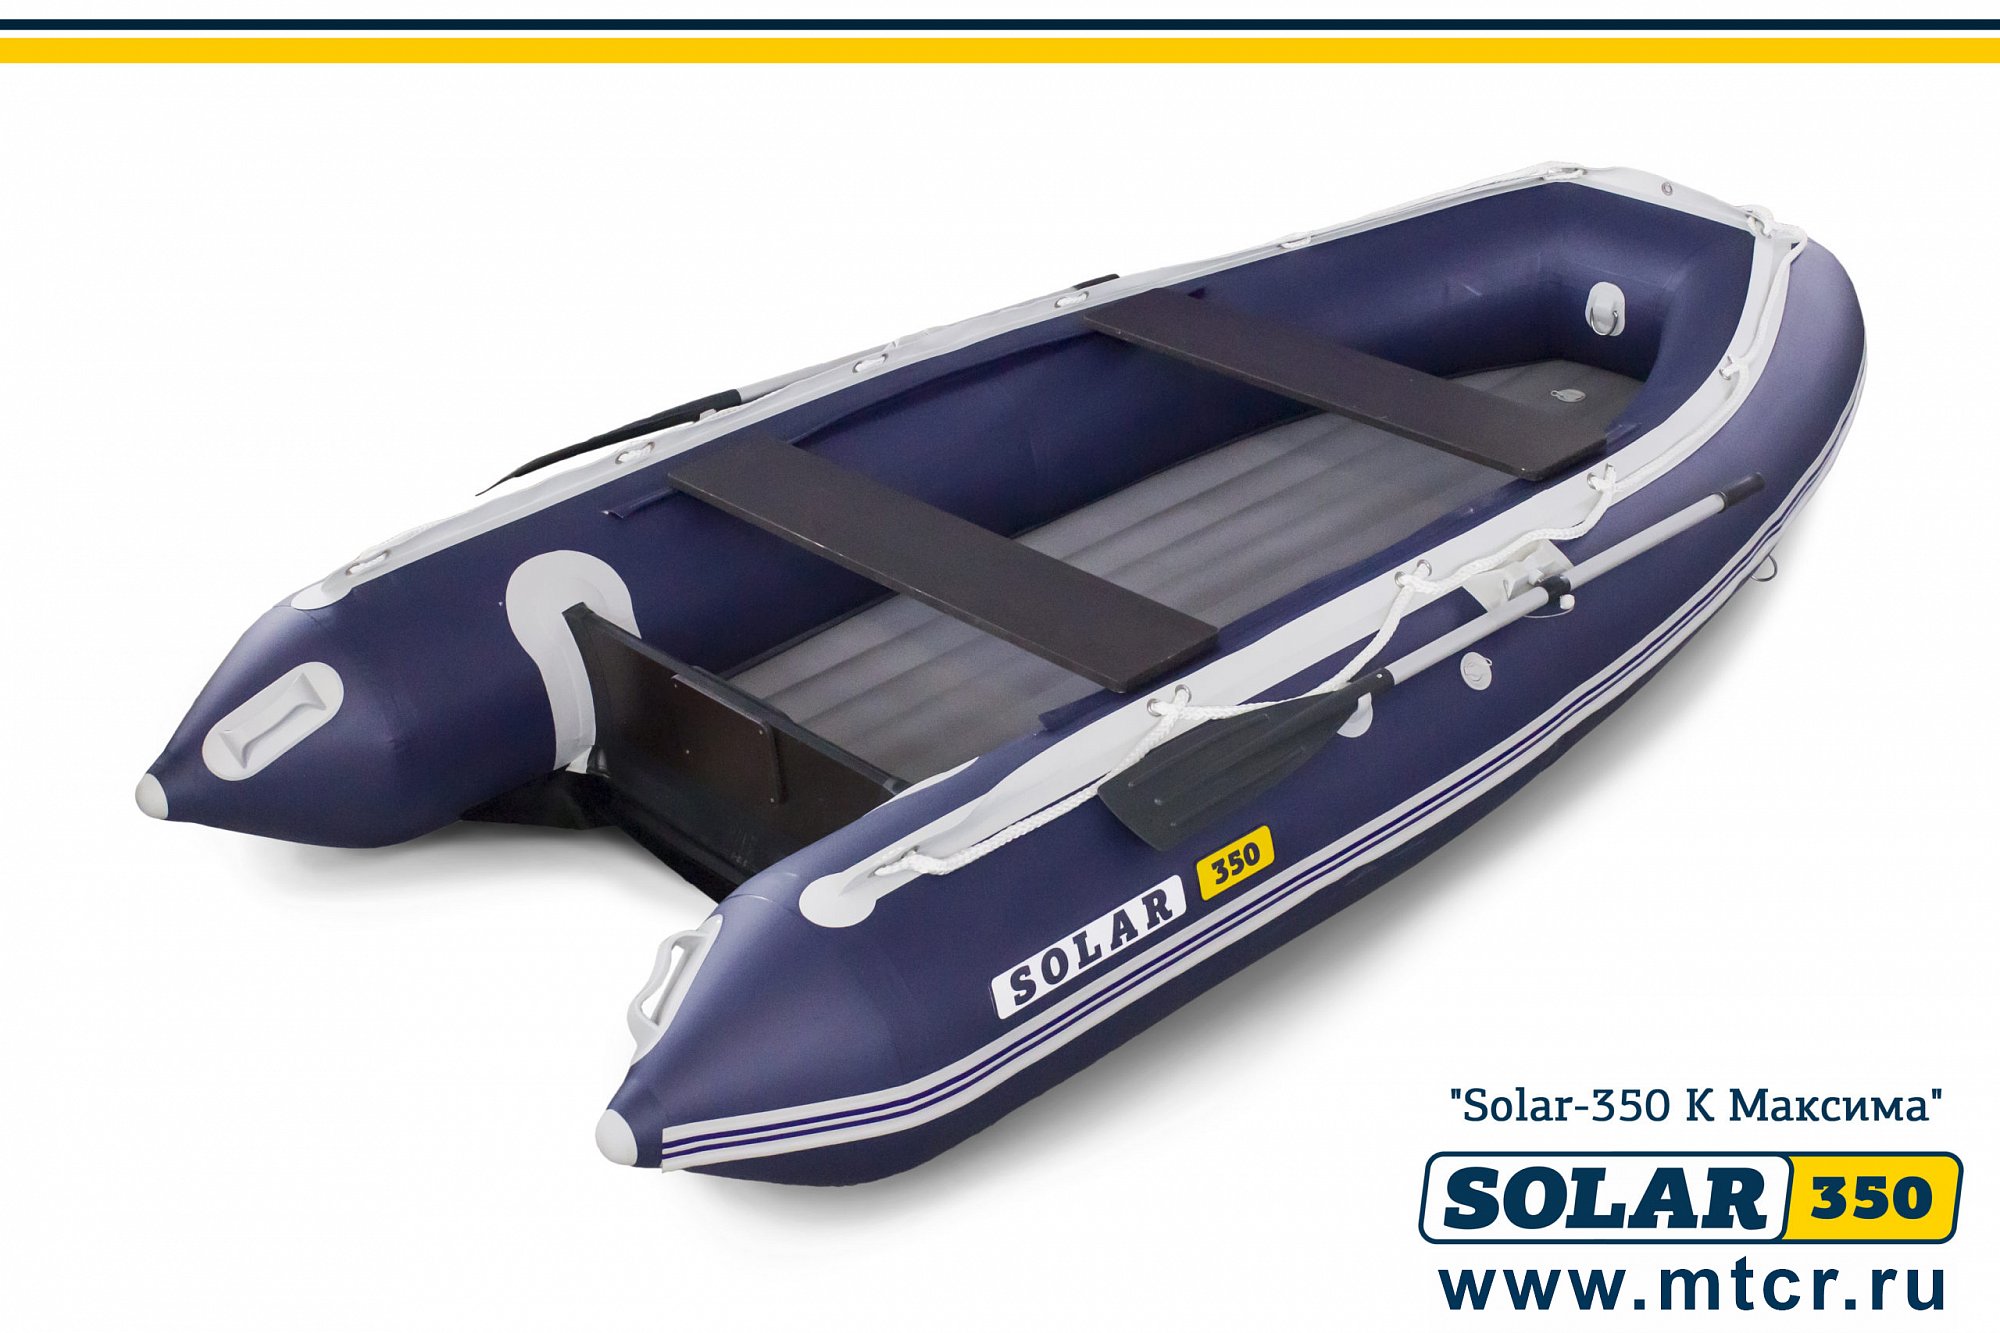 Лодка солар производитель. Лодка надувная Солар Максима-350. Лодка ПВХ Solar-350 к (Максима). Моторная надувная лодка Solar 350. Лодка ПВХ Солар 350.